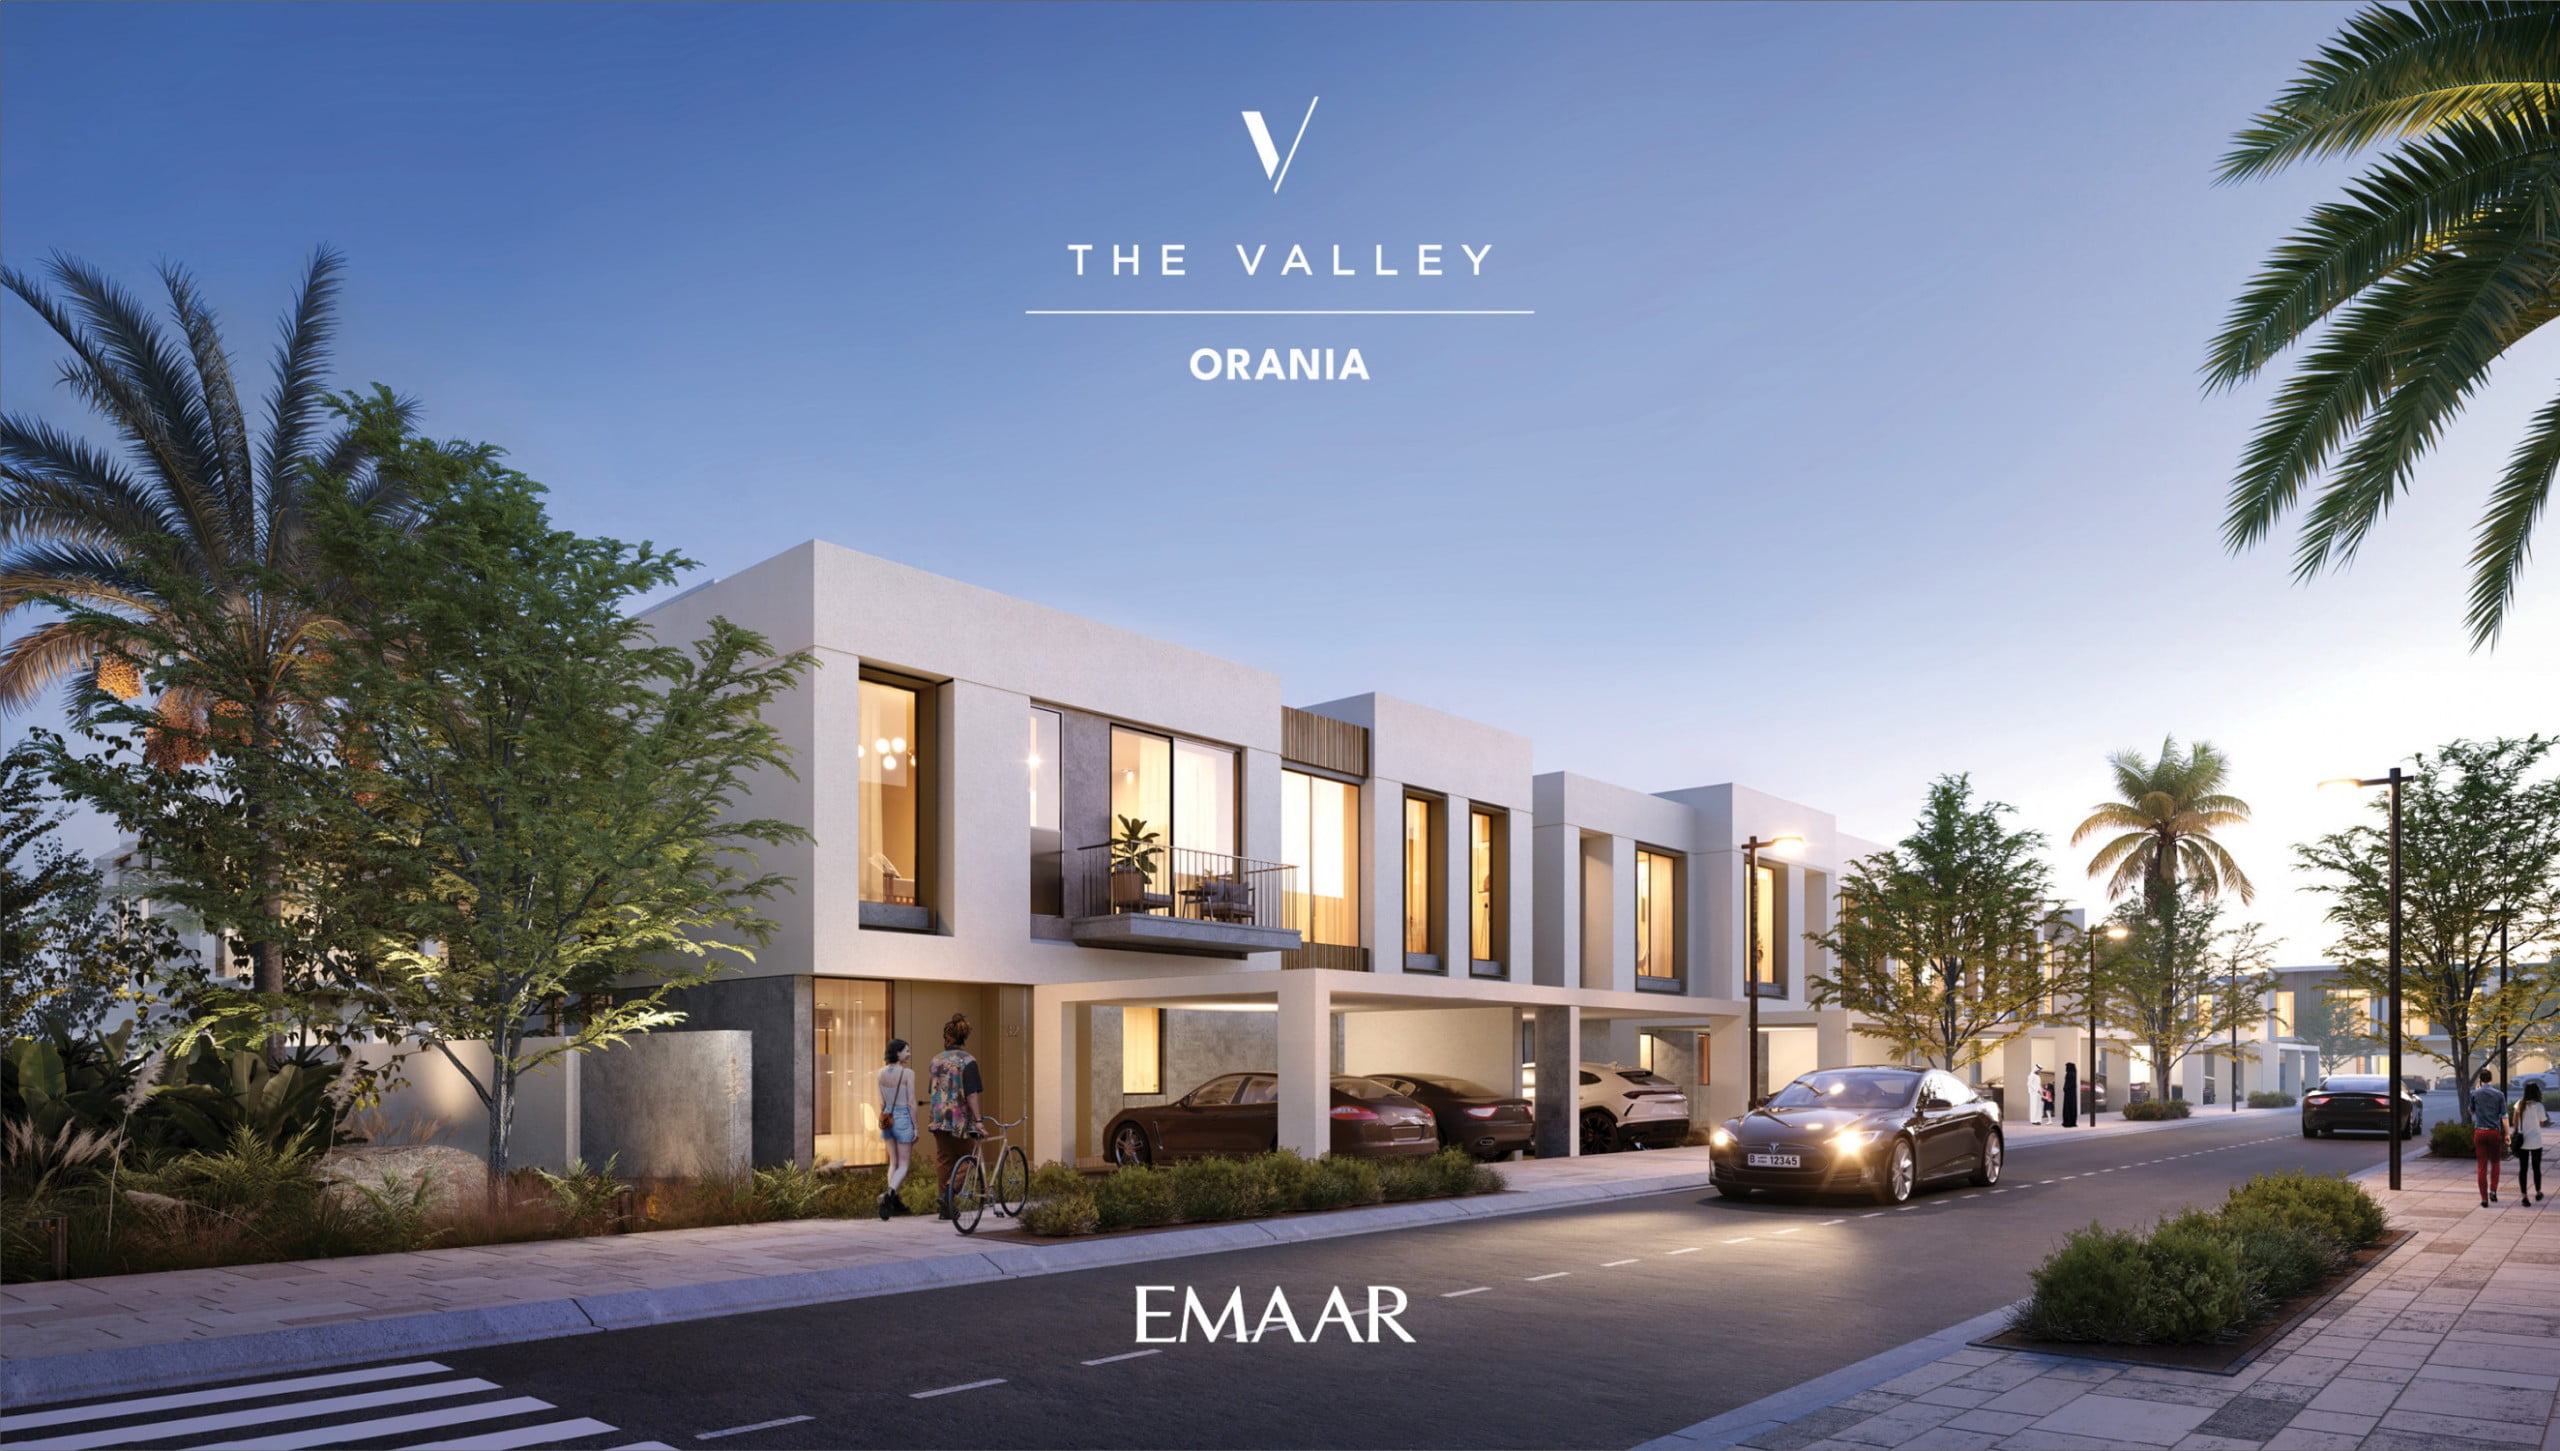 ORANIA THE VALLEY EMAAR 06 scaled - Immobilier Dubai